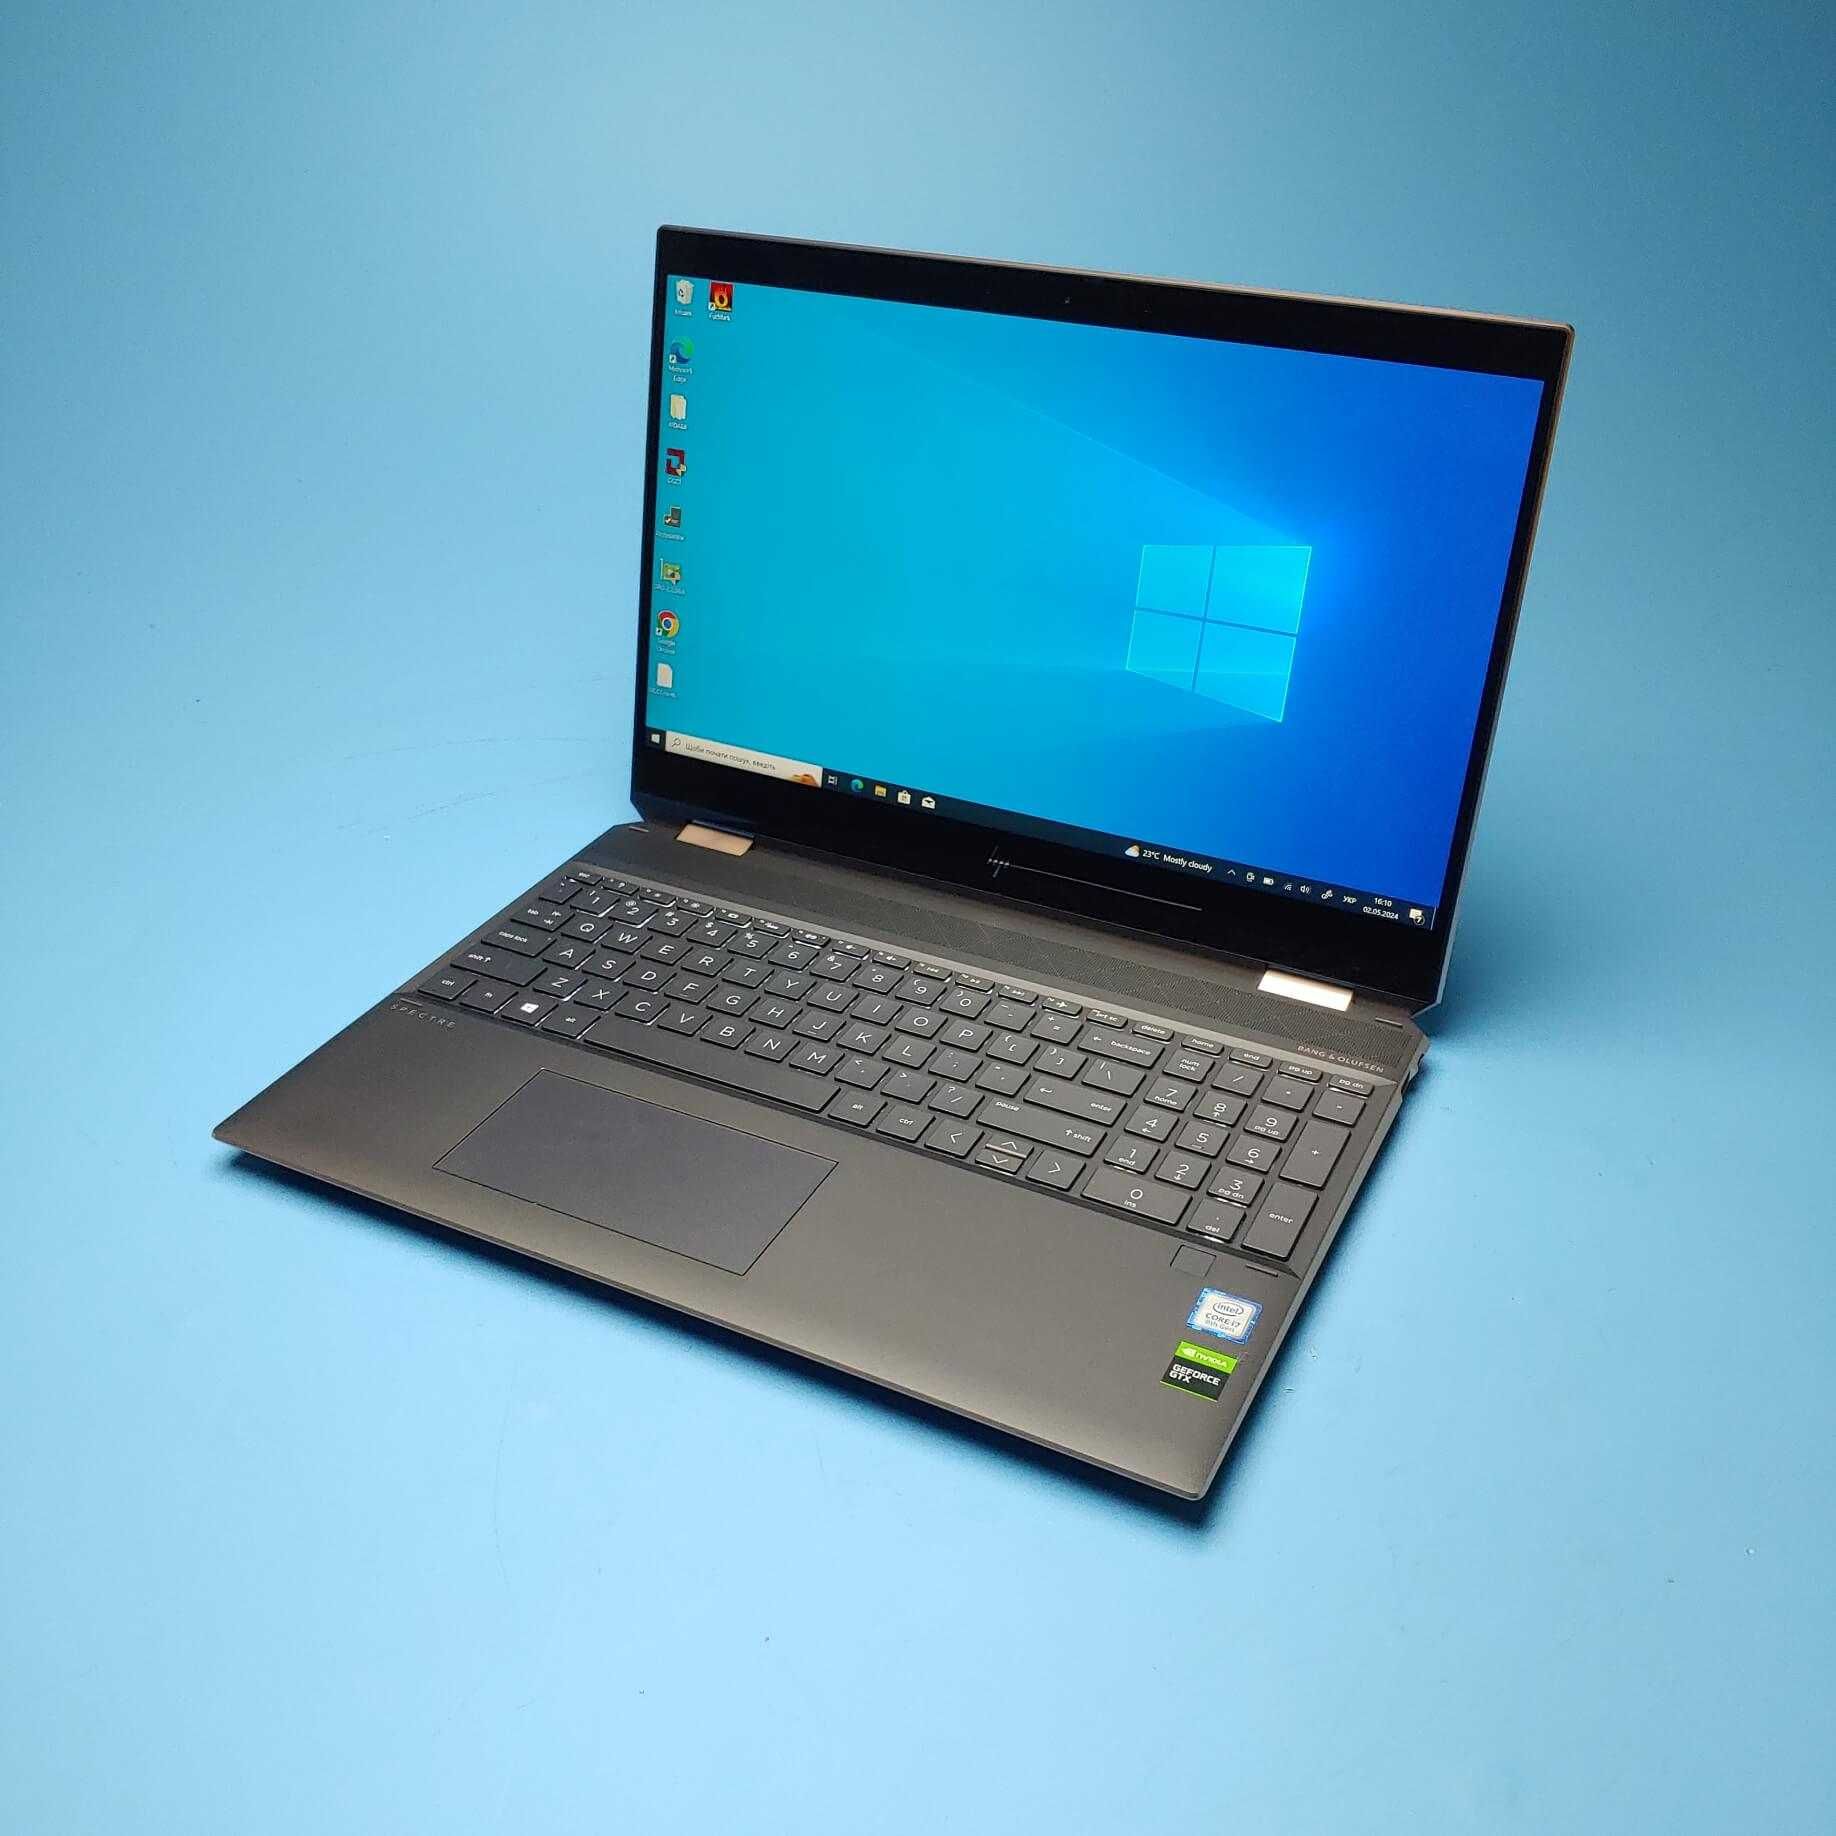 Ноутбук HPSpectre x36015t-df000(i7-8750H/RAM16/SSD2TB/GTX1050Ti)(7285)